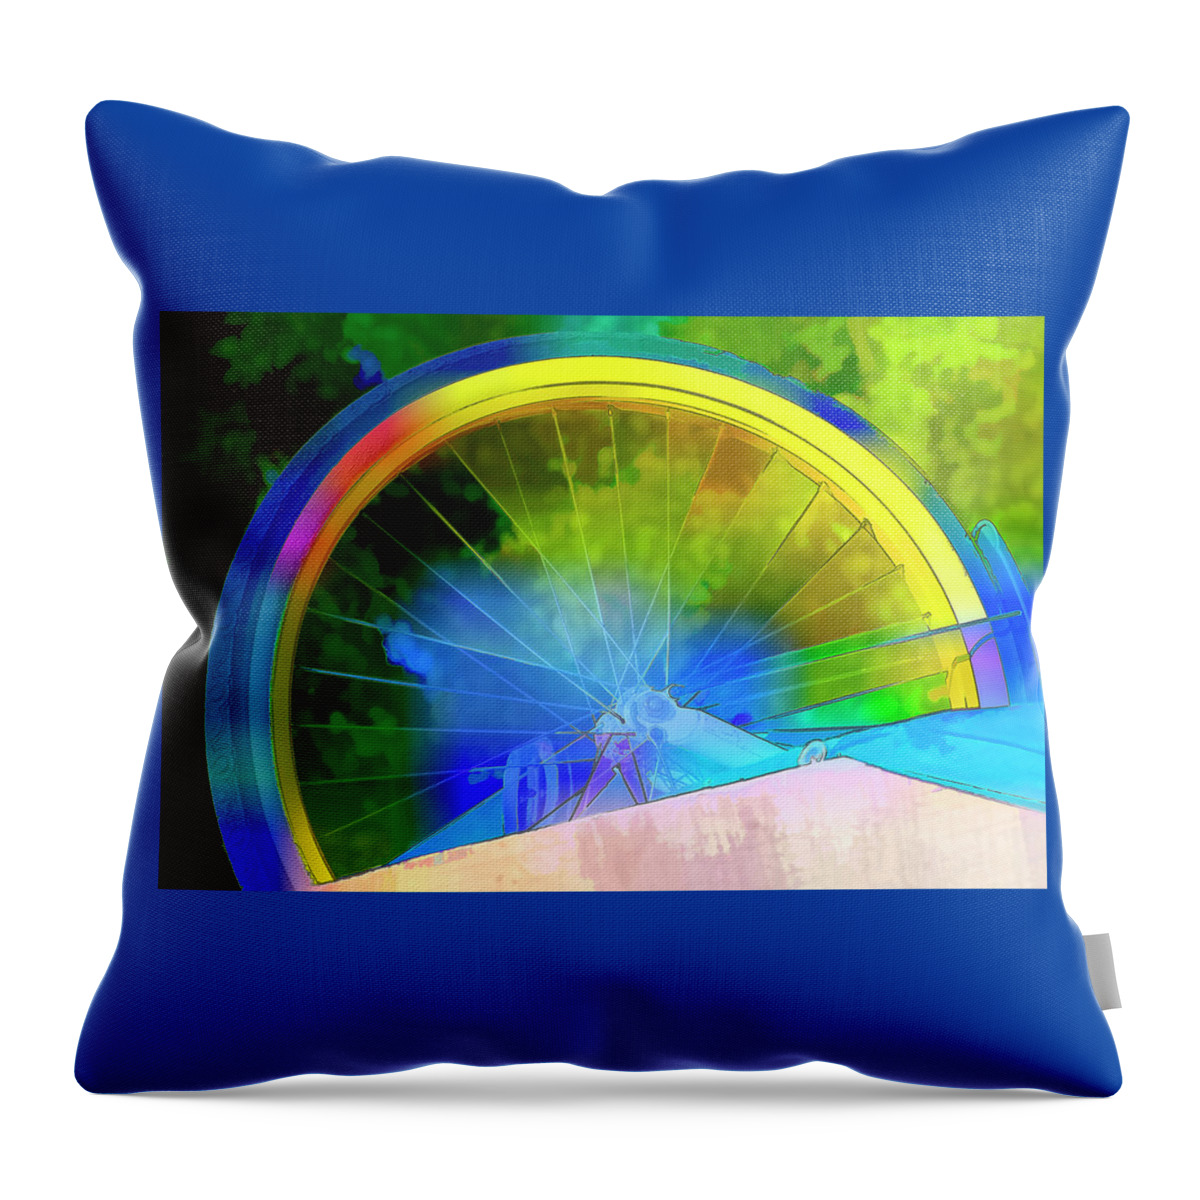 Photography Throw Pillow featuring the digital art Rainbow Wheel by Terry Davis